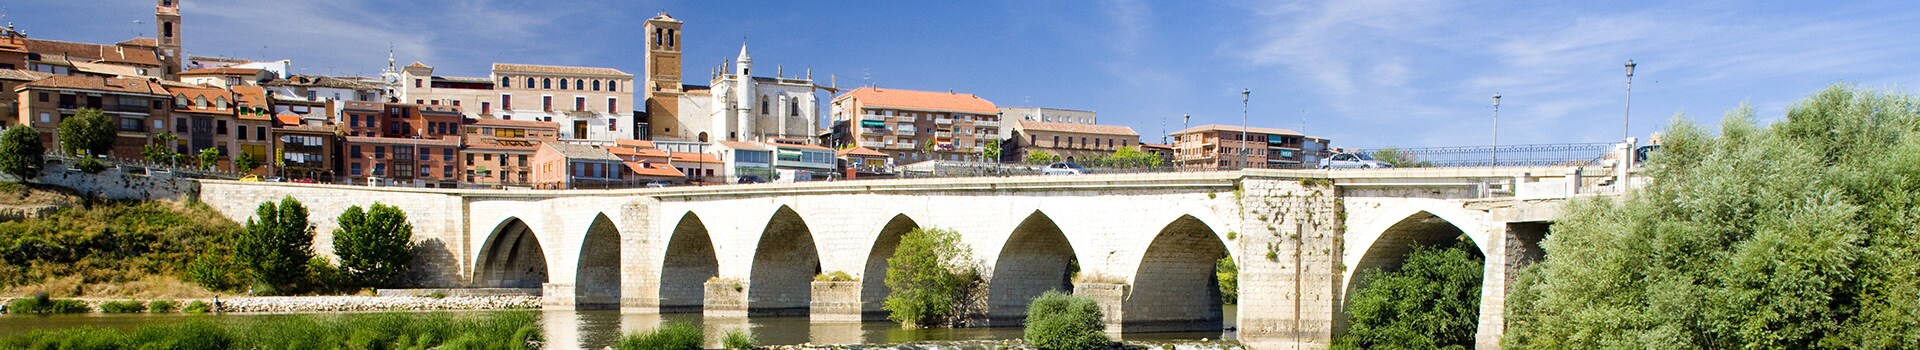 Minorca - Valladolid